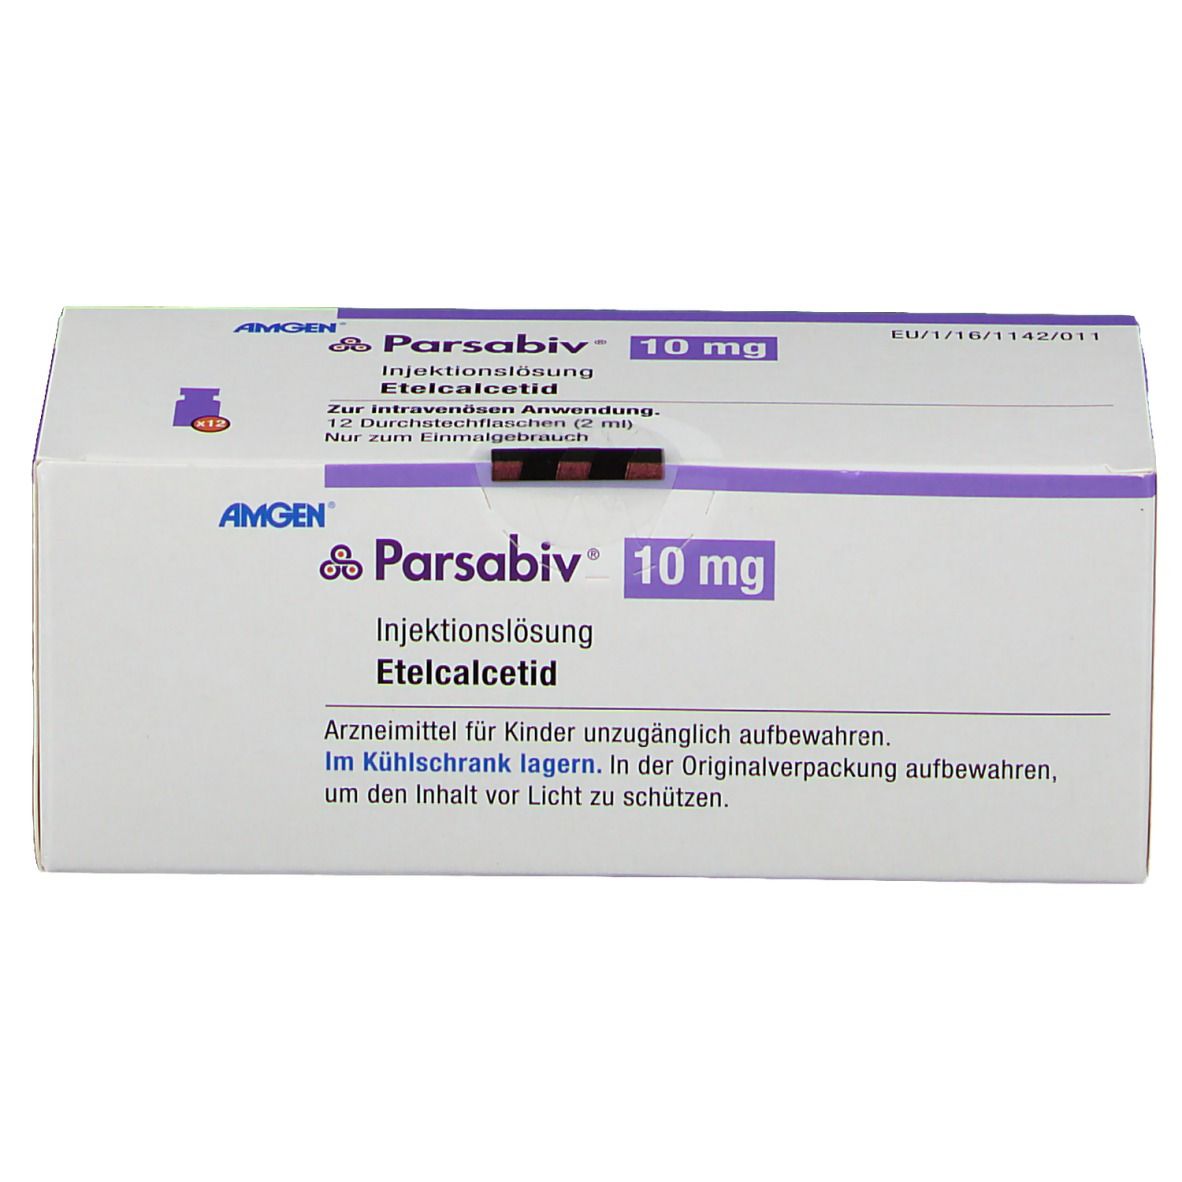 Parsabiv® 10 mg